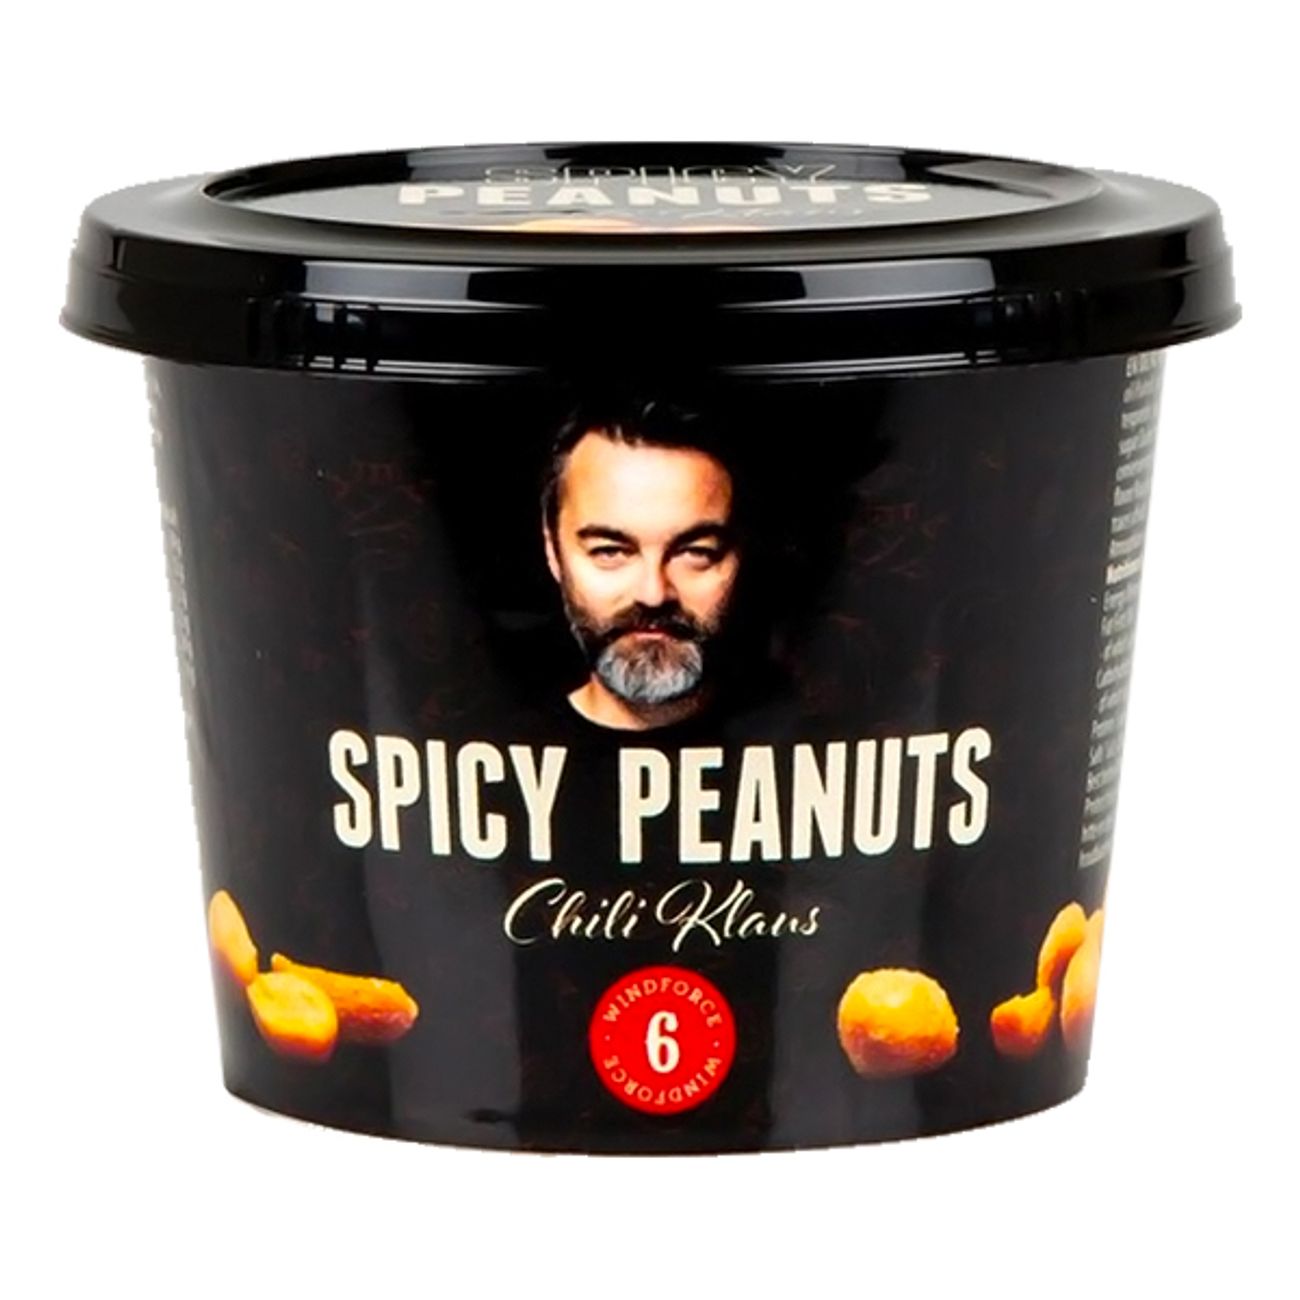 chili-klaus-spicy-peanuts-74601-1